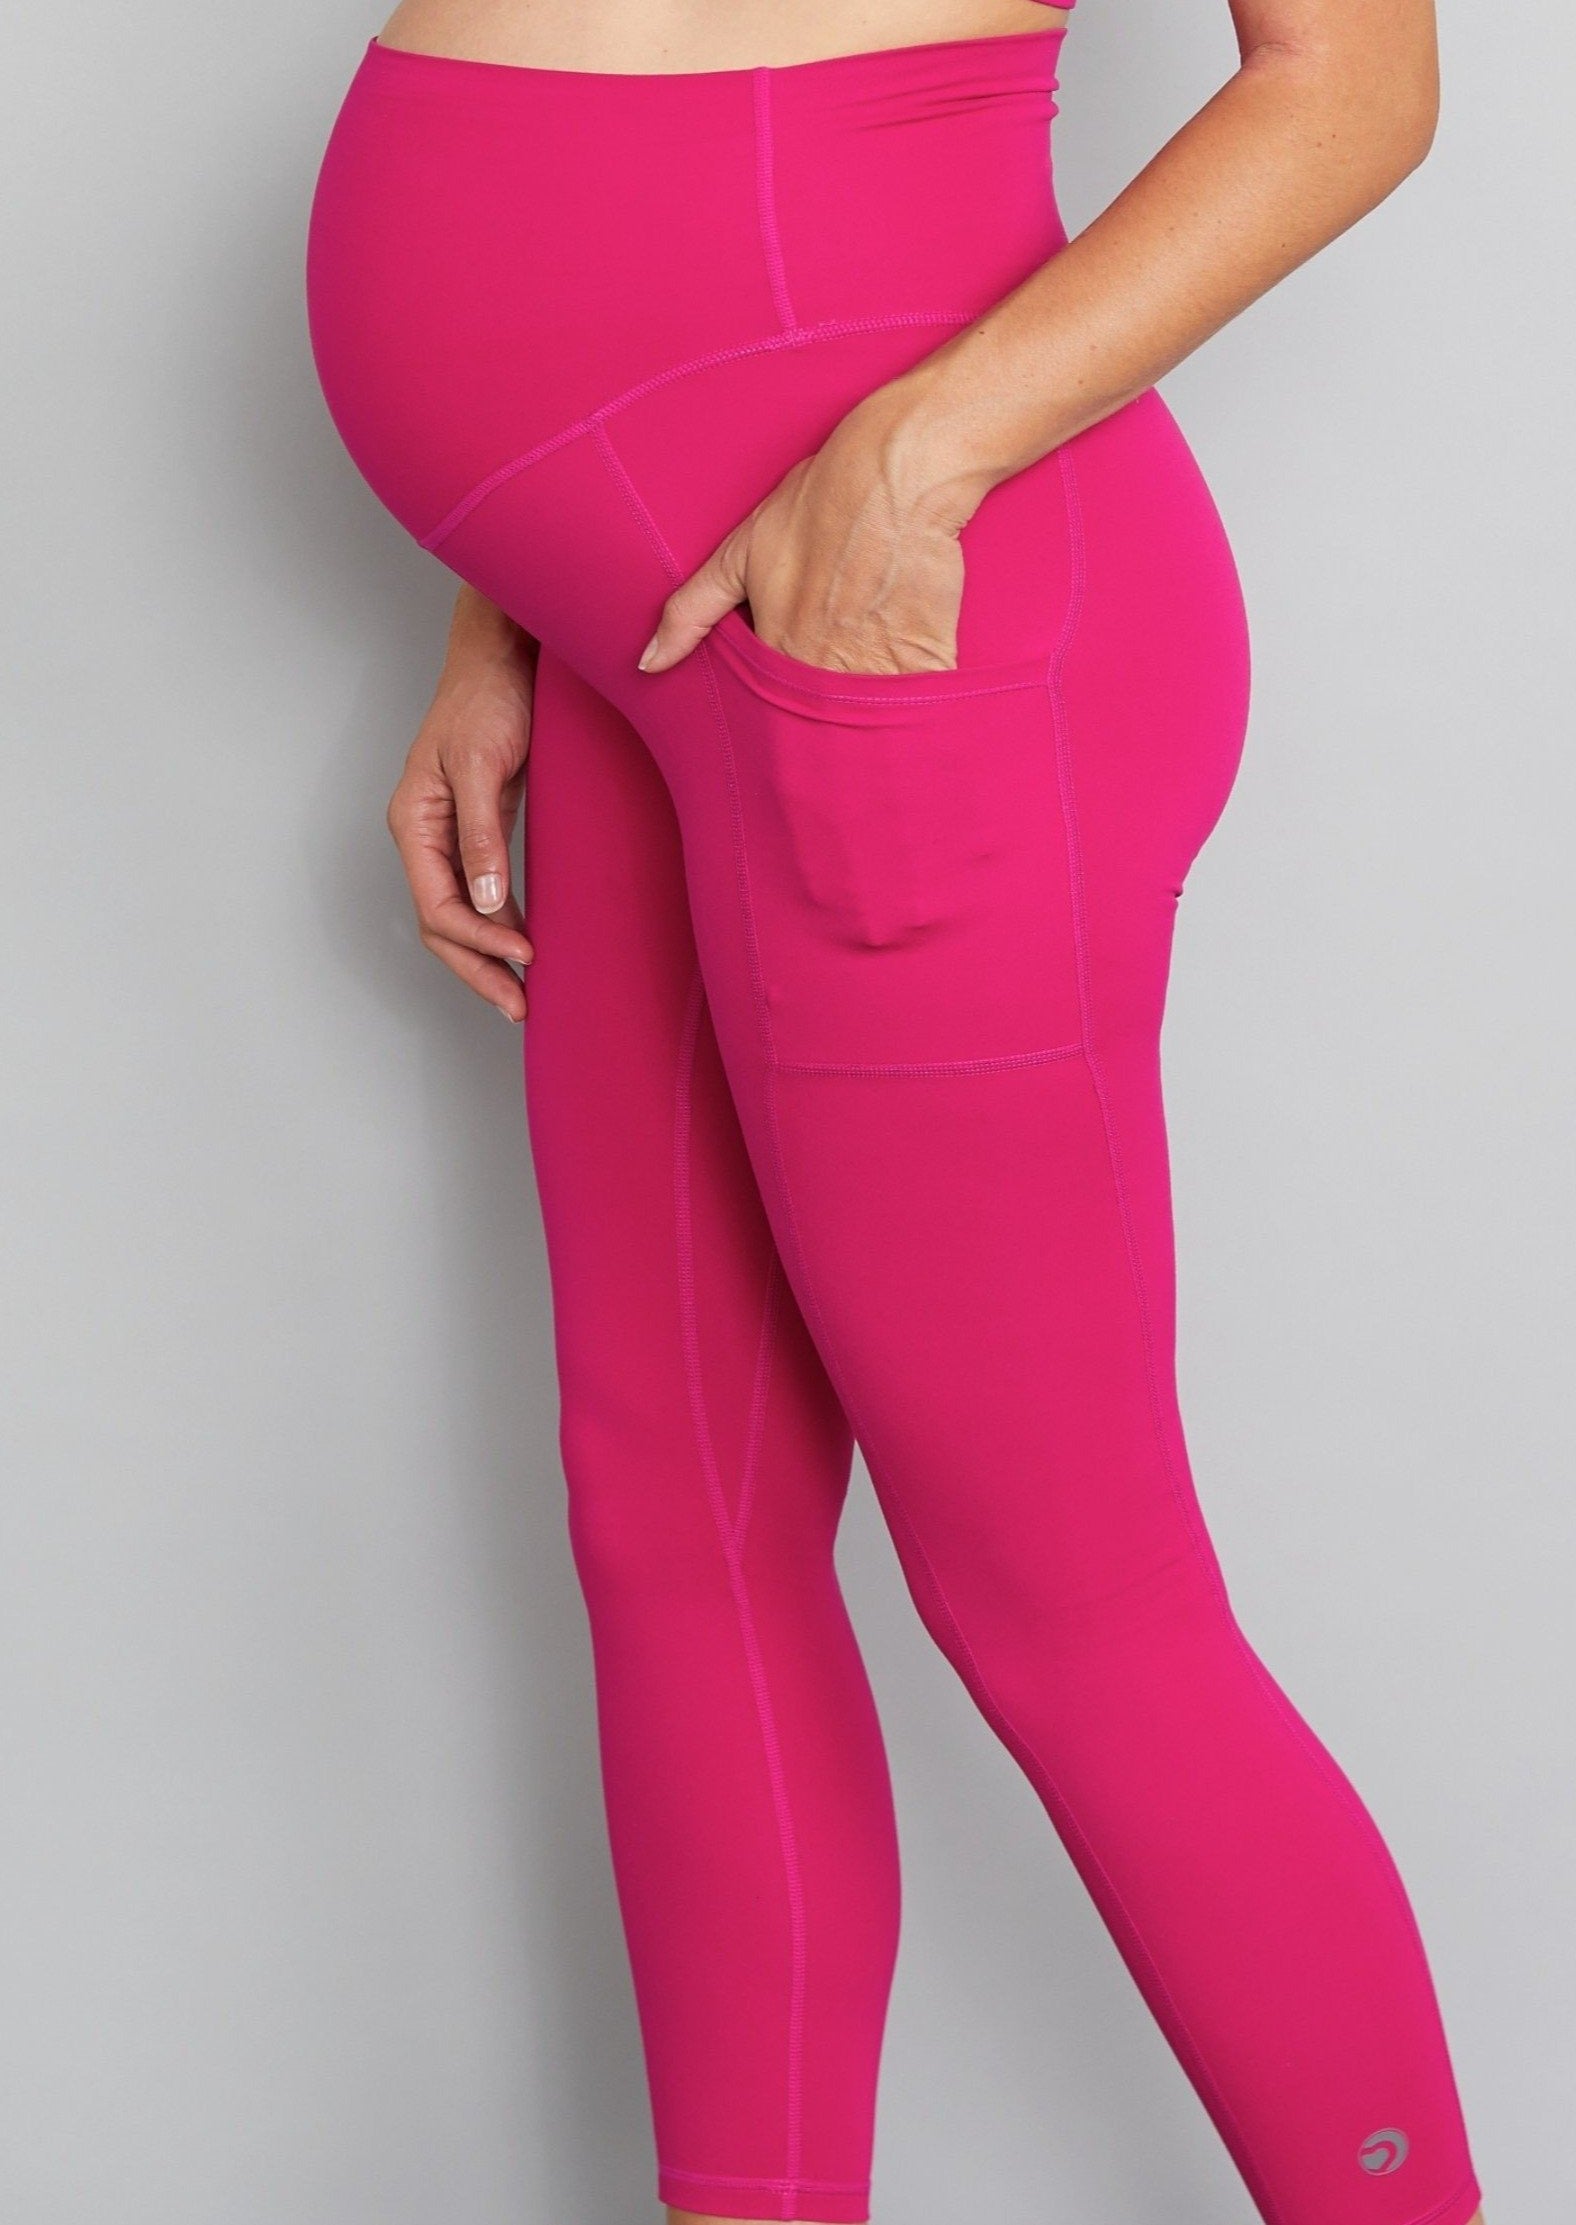 FAFWYP Maternity Leggings Comfy Stretch Workout Leggings Pregnant Capri  Pant over The Belly Postpartum Breastfeeding Pregnancy Yoga Pants